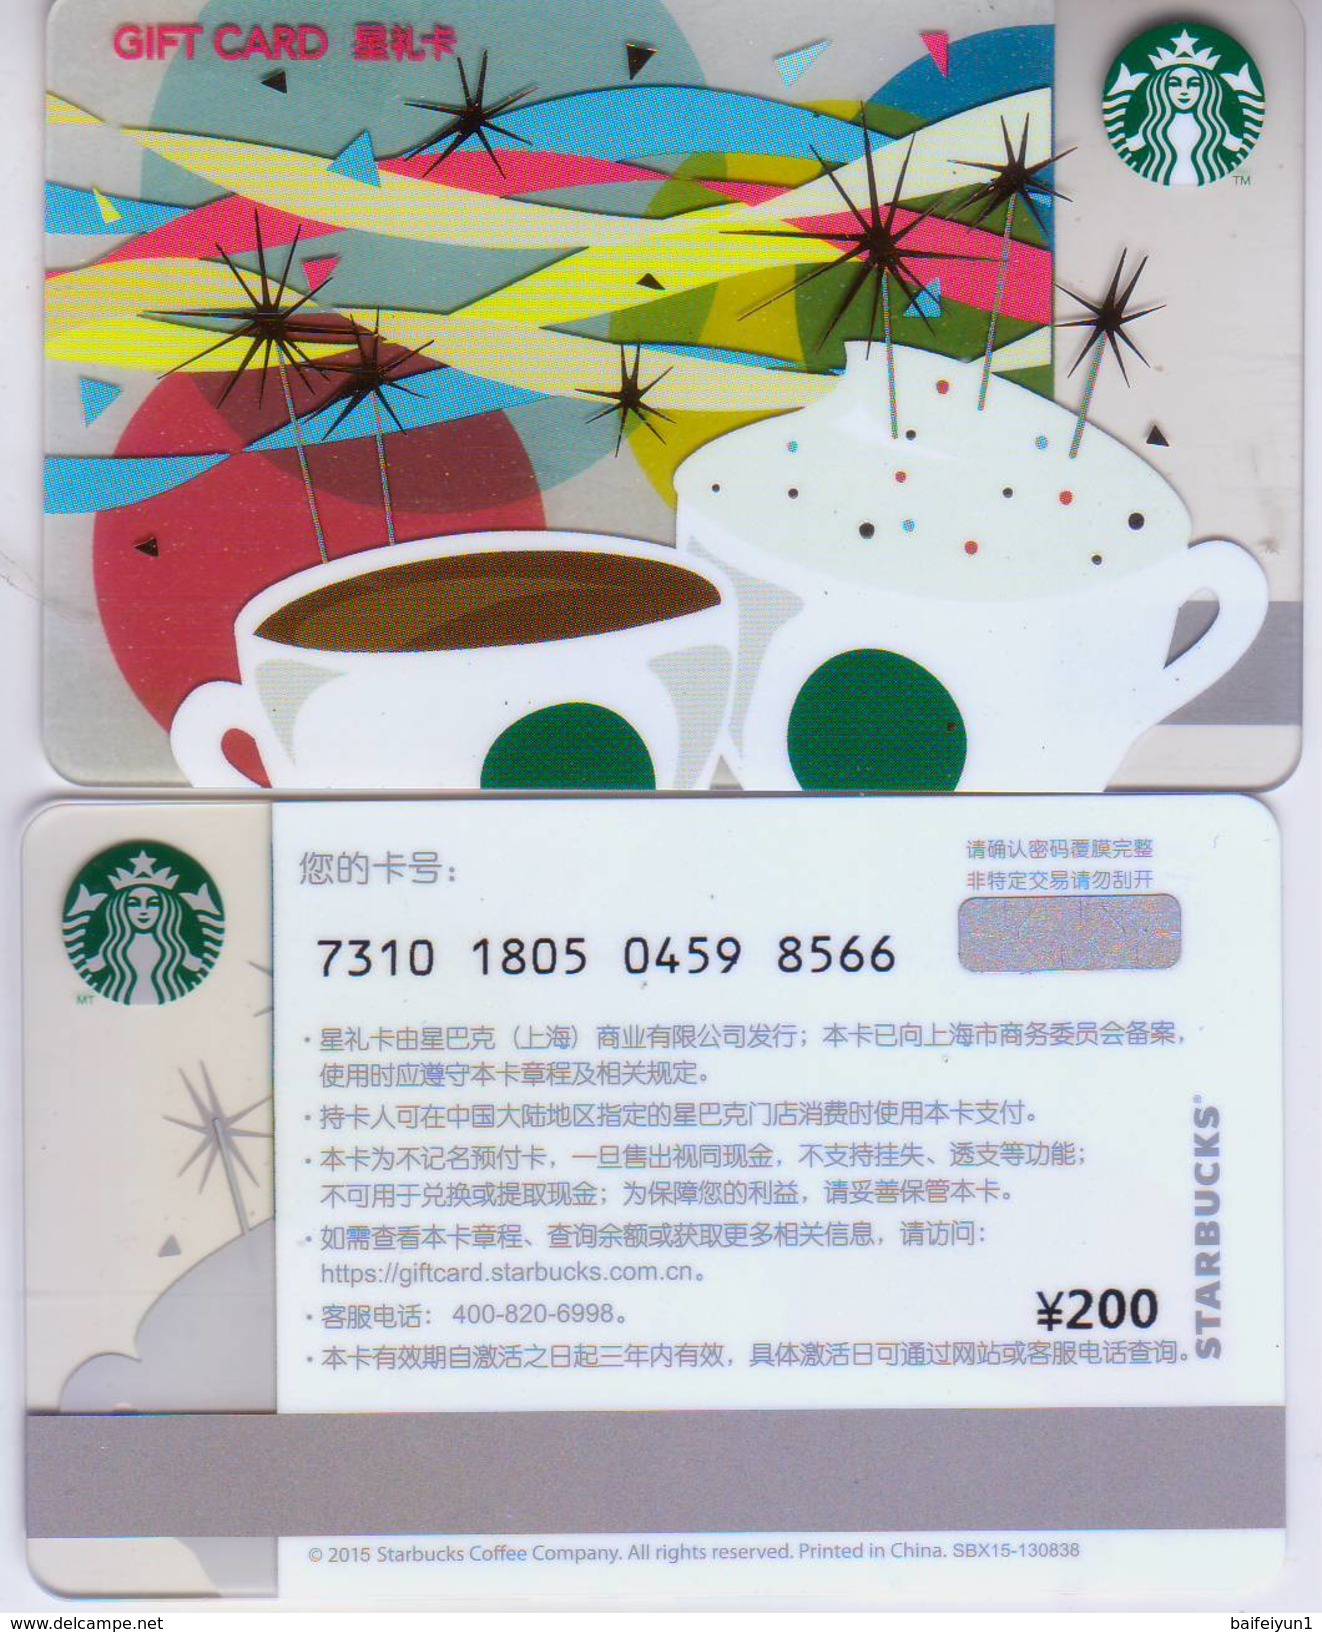 China Starbucks 2015 Birthday Card Gift Cards Set RMB200 - China